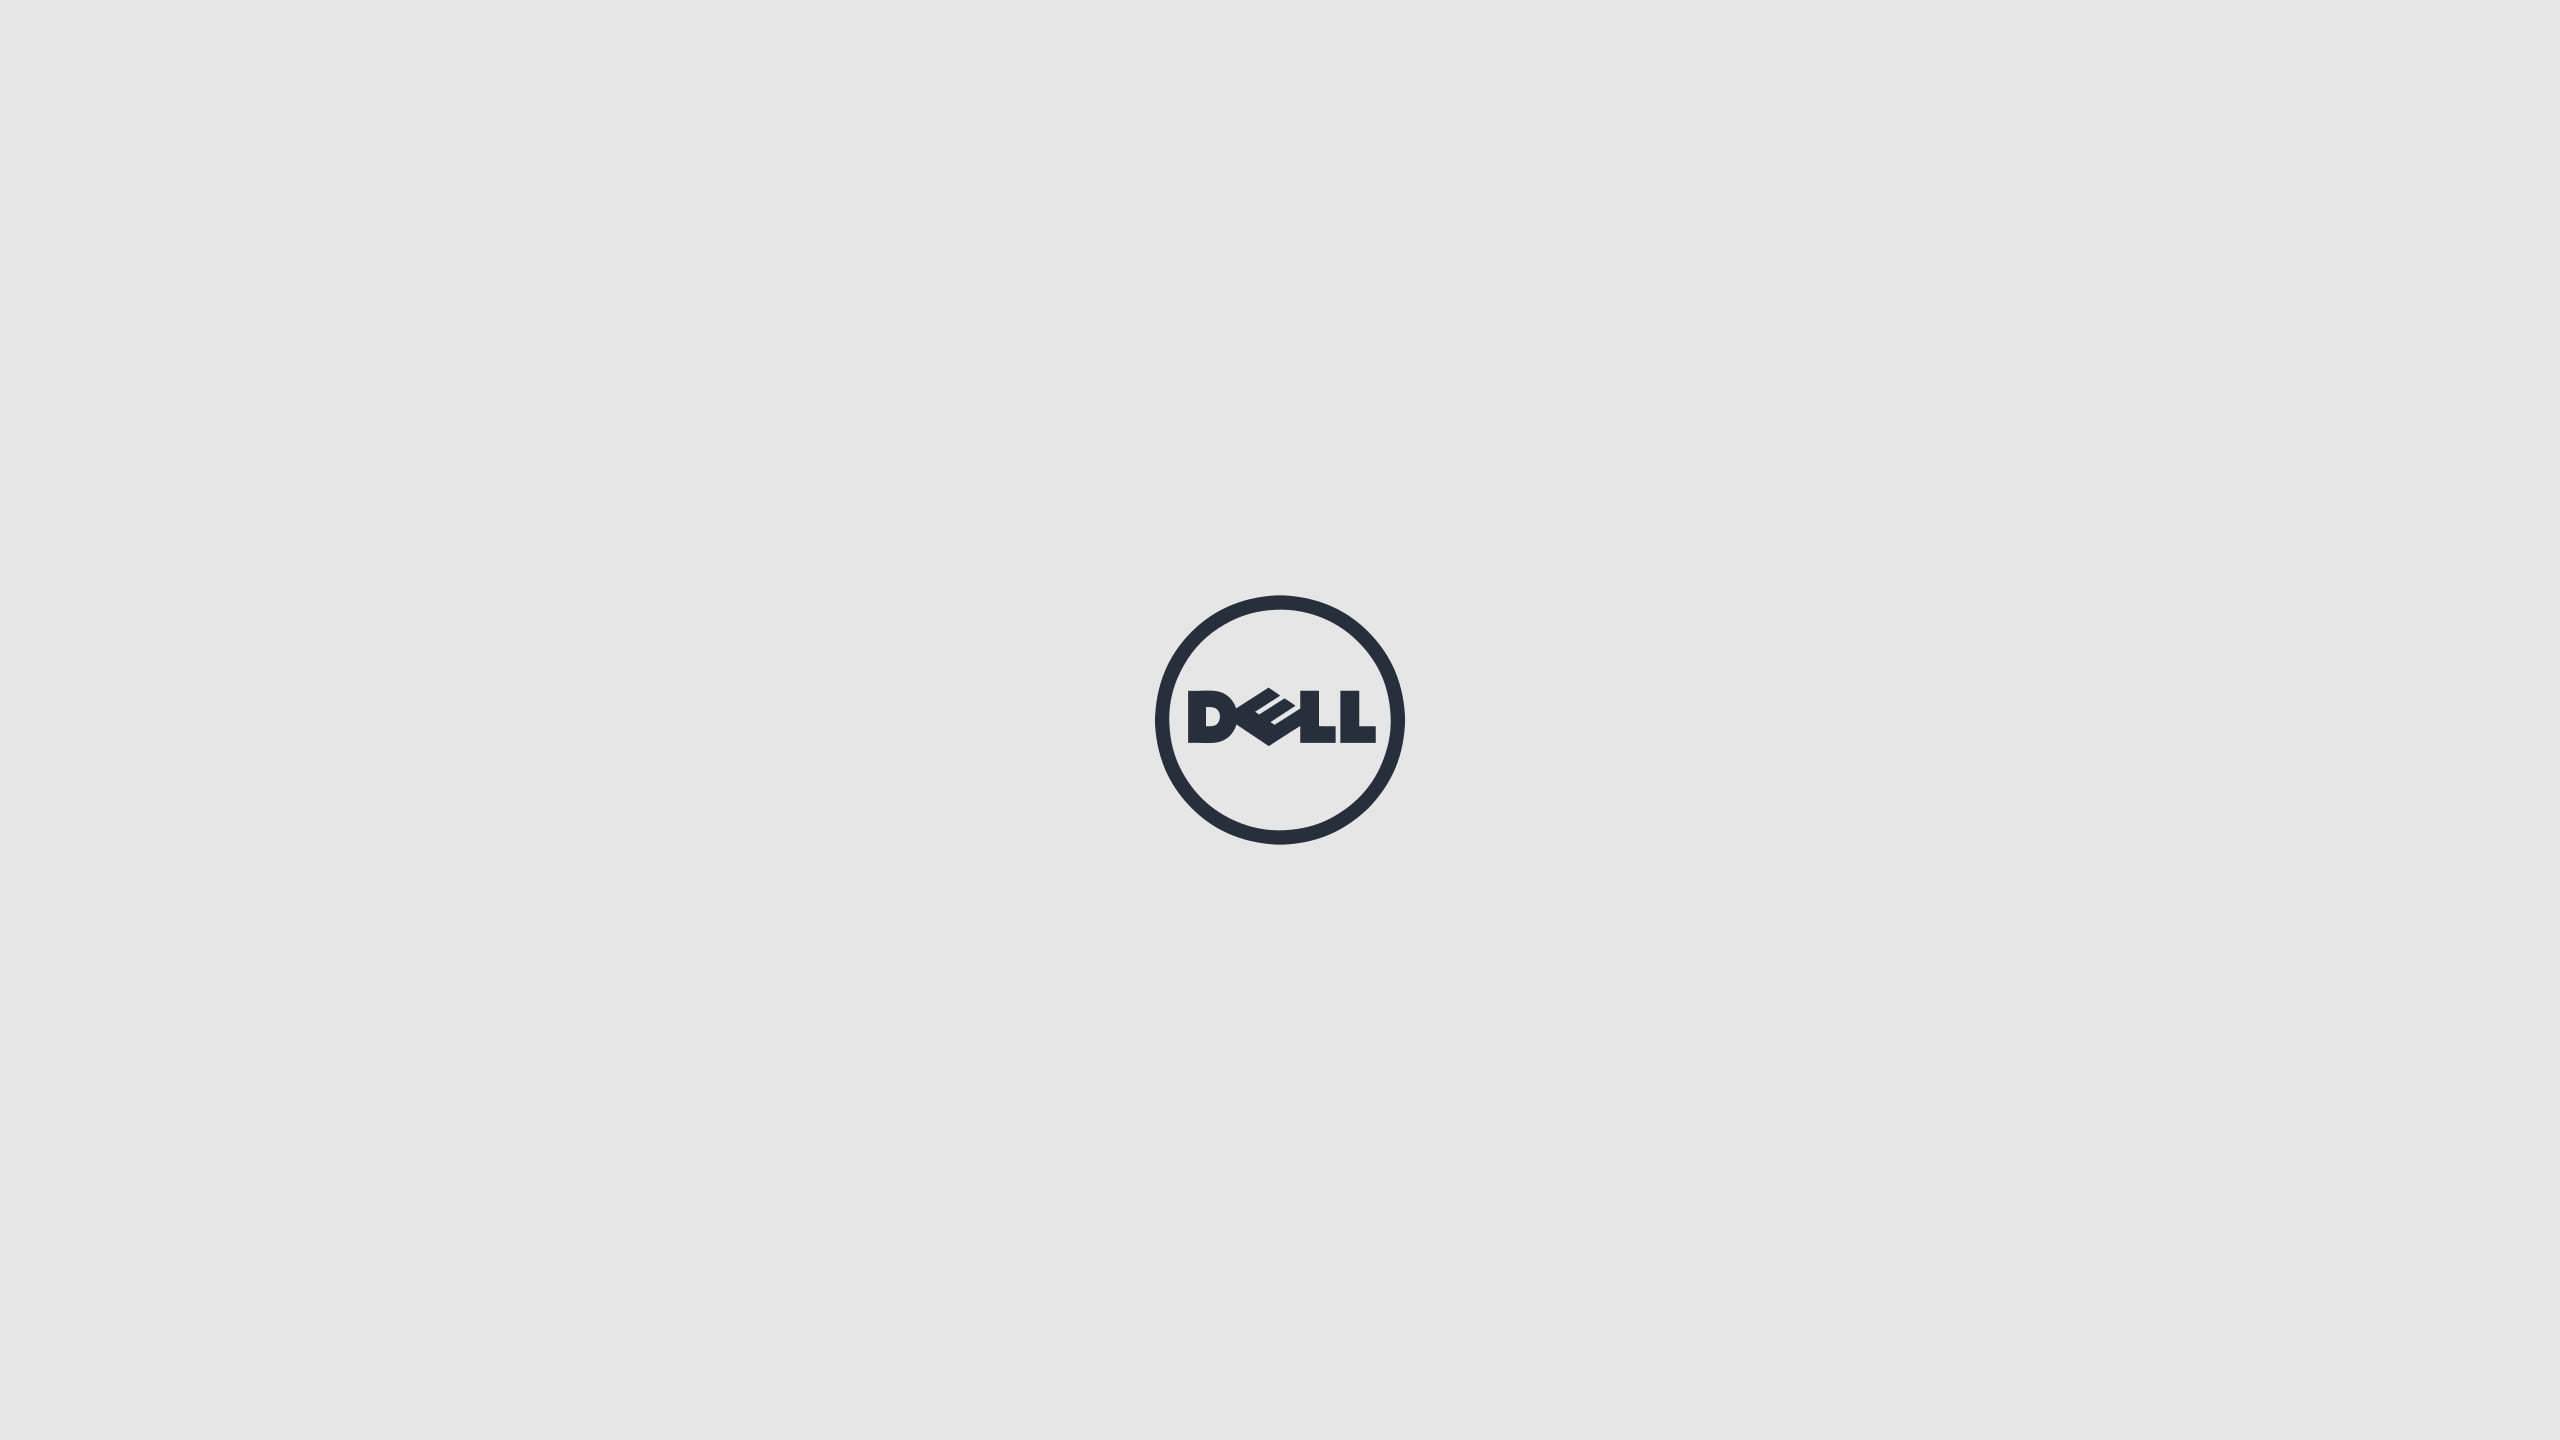 Dell Logo On White Background Hd Wallpaper Wallpaper Flare